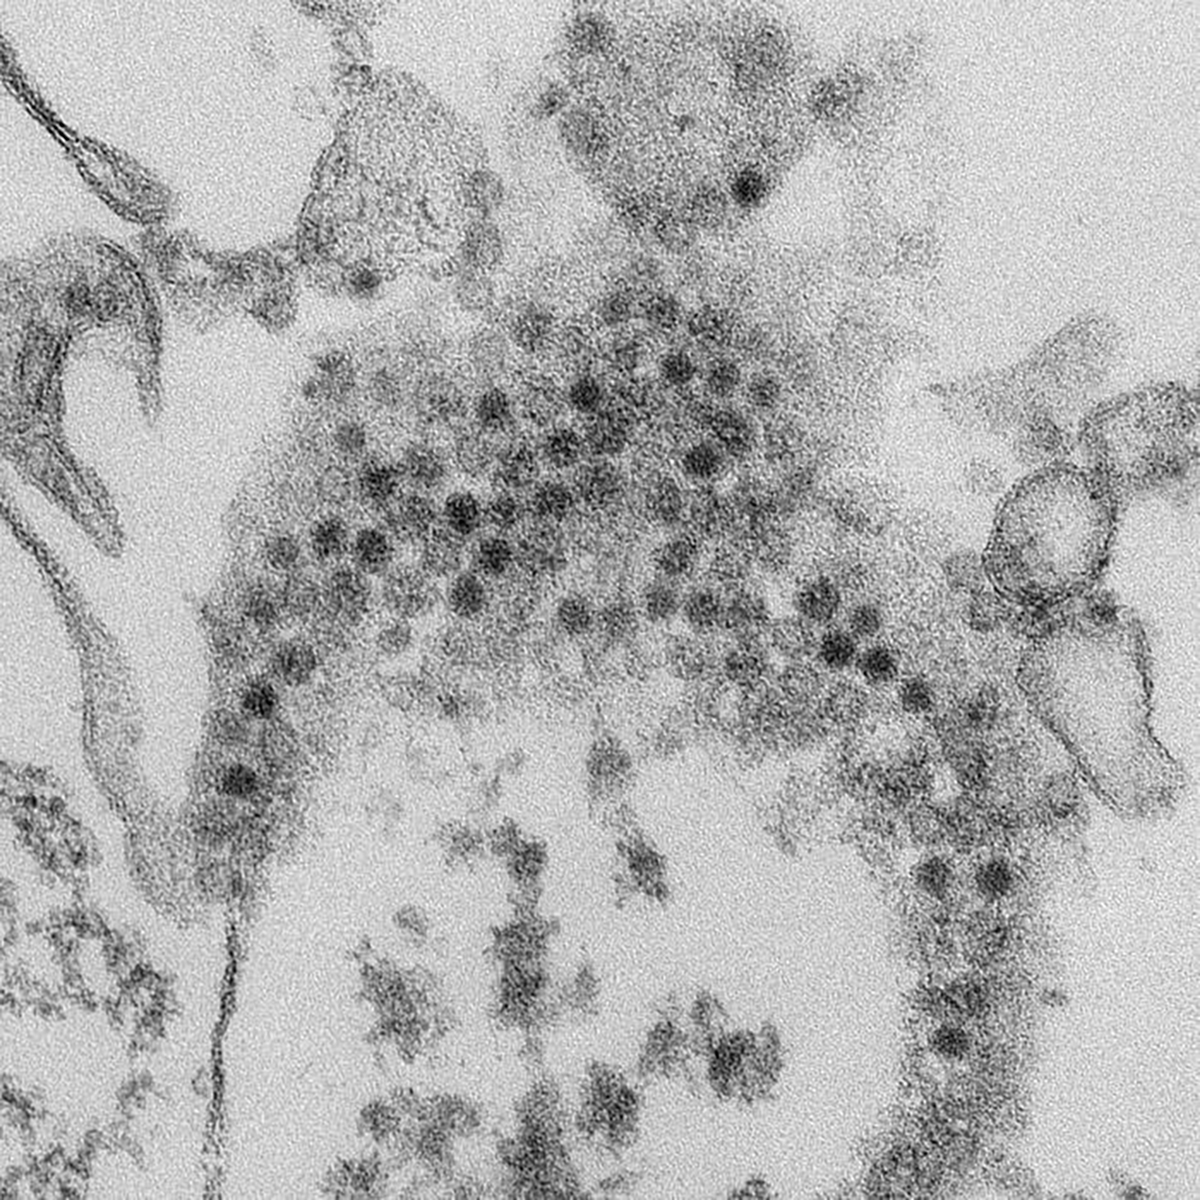 Microscopic image of enterovirus-D68